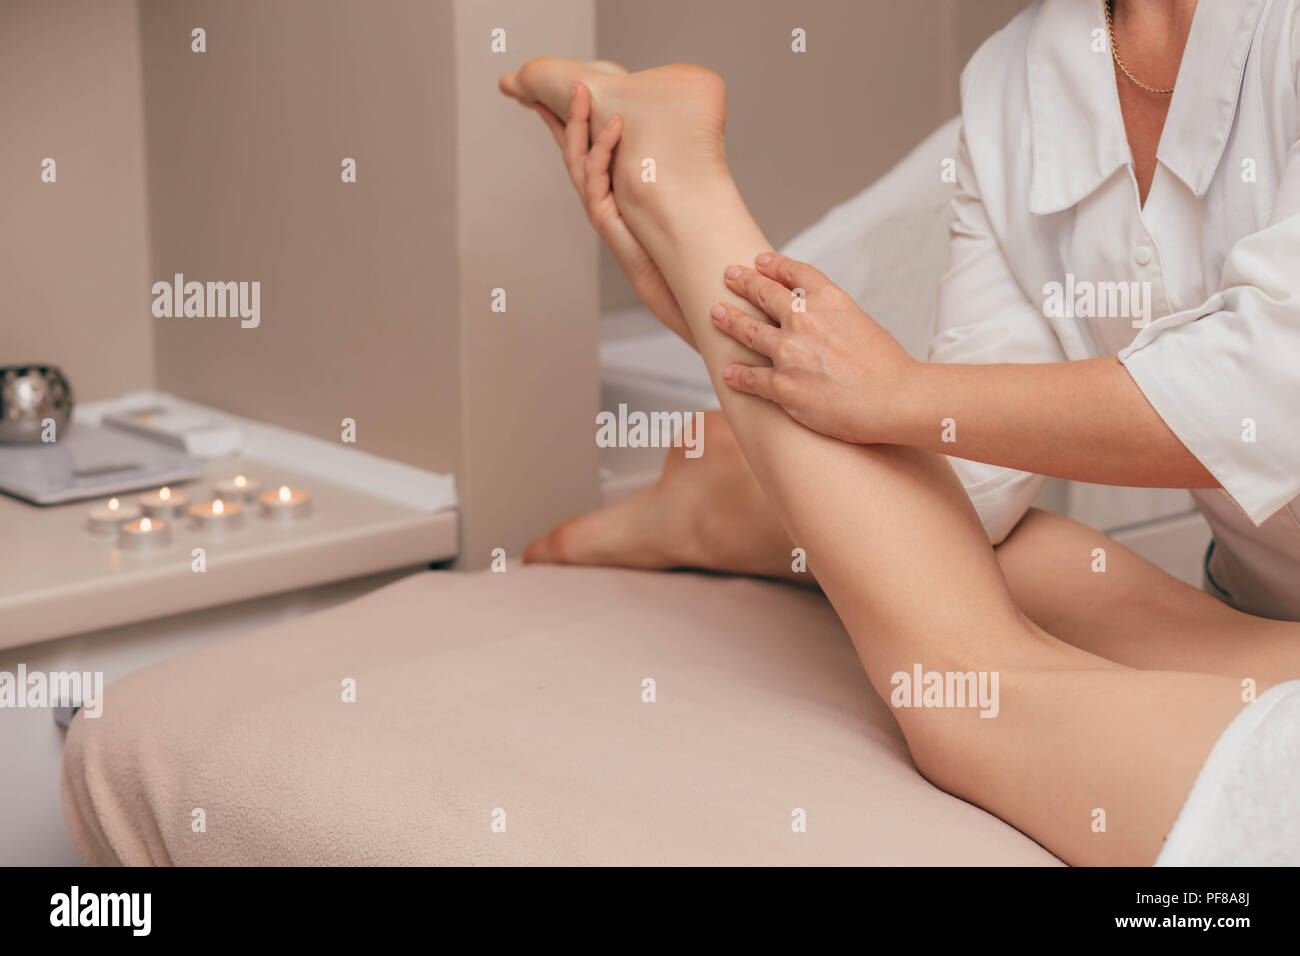 Woman having sports foot massage.rejuvenating foot massage for athletes in Spa Salon Stock Photo